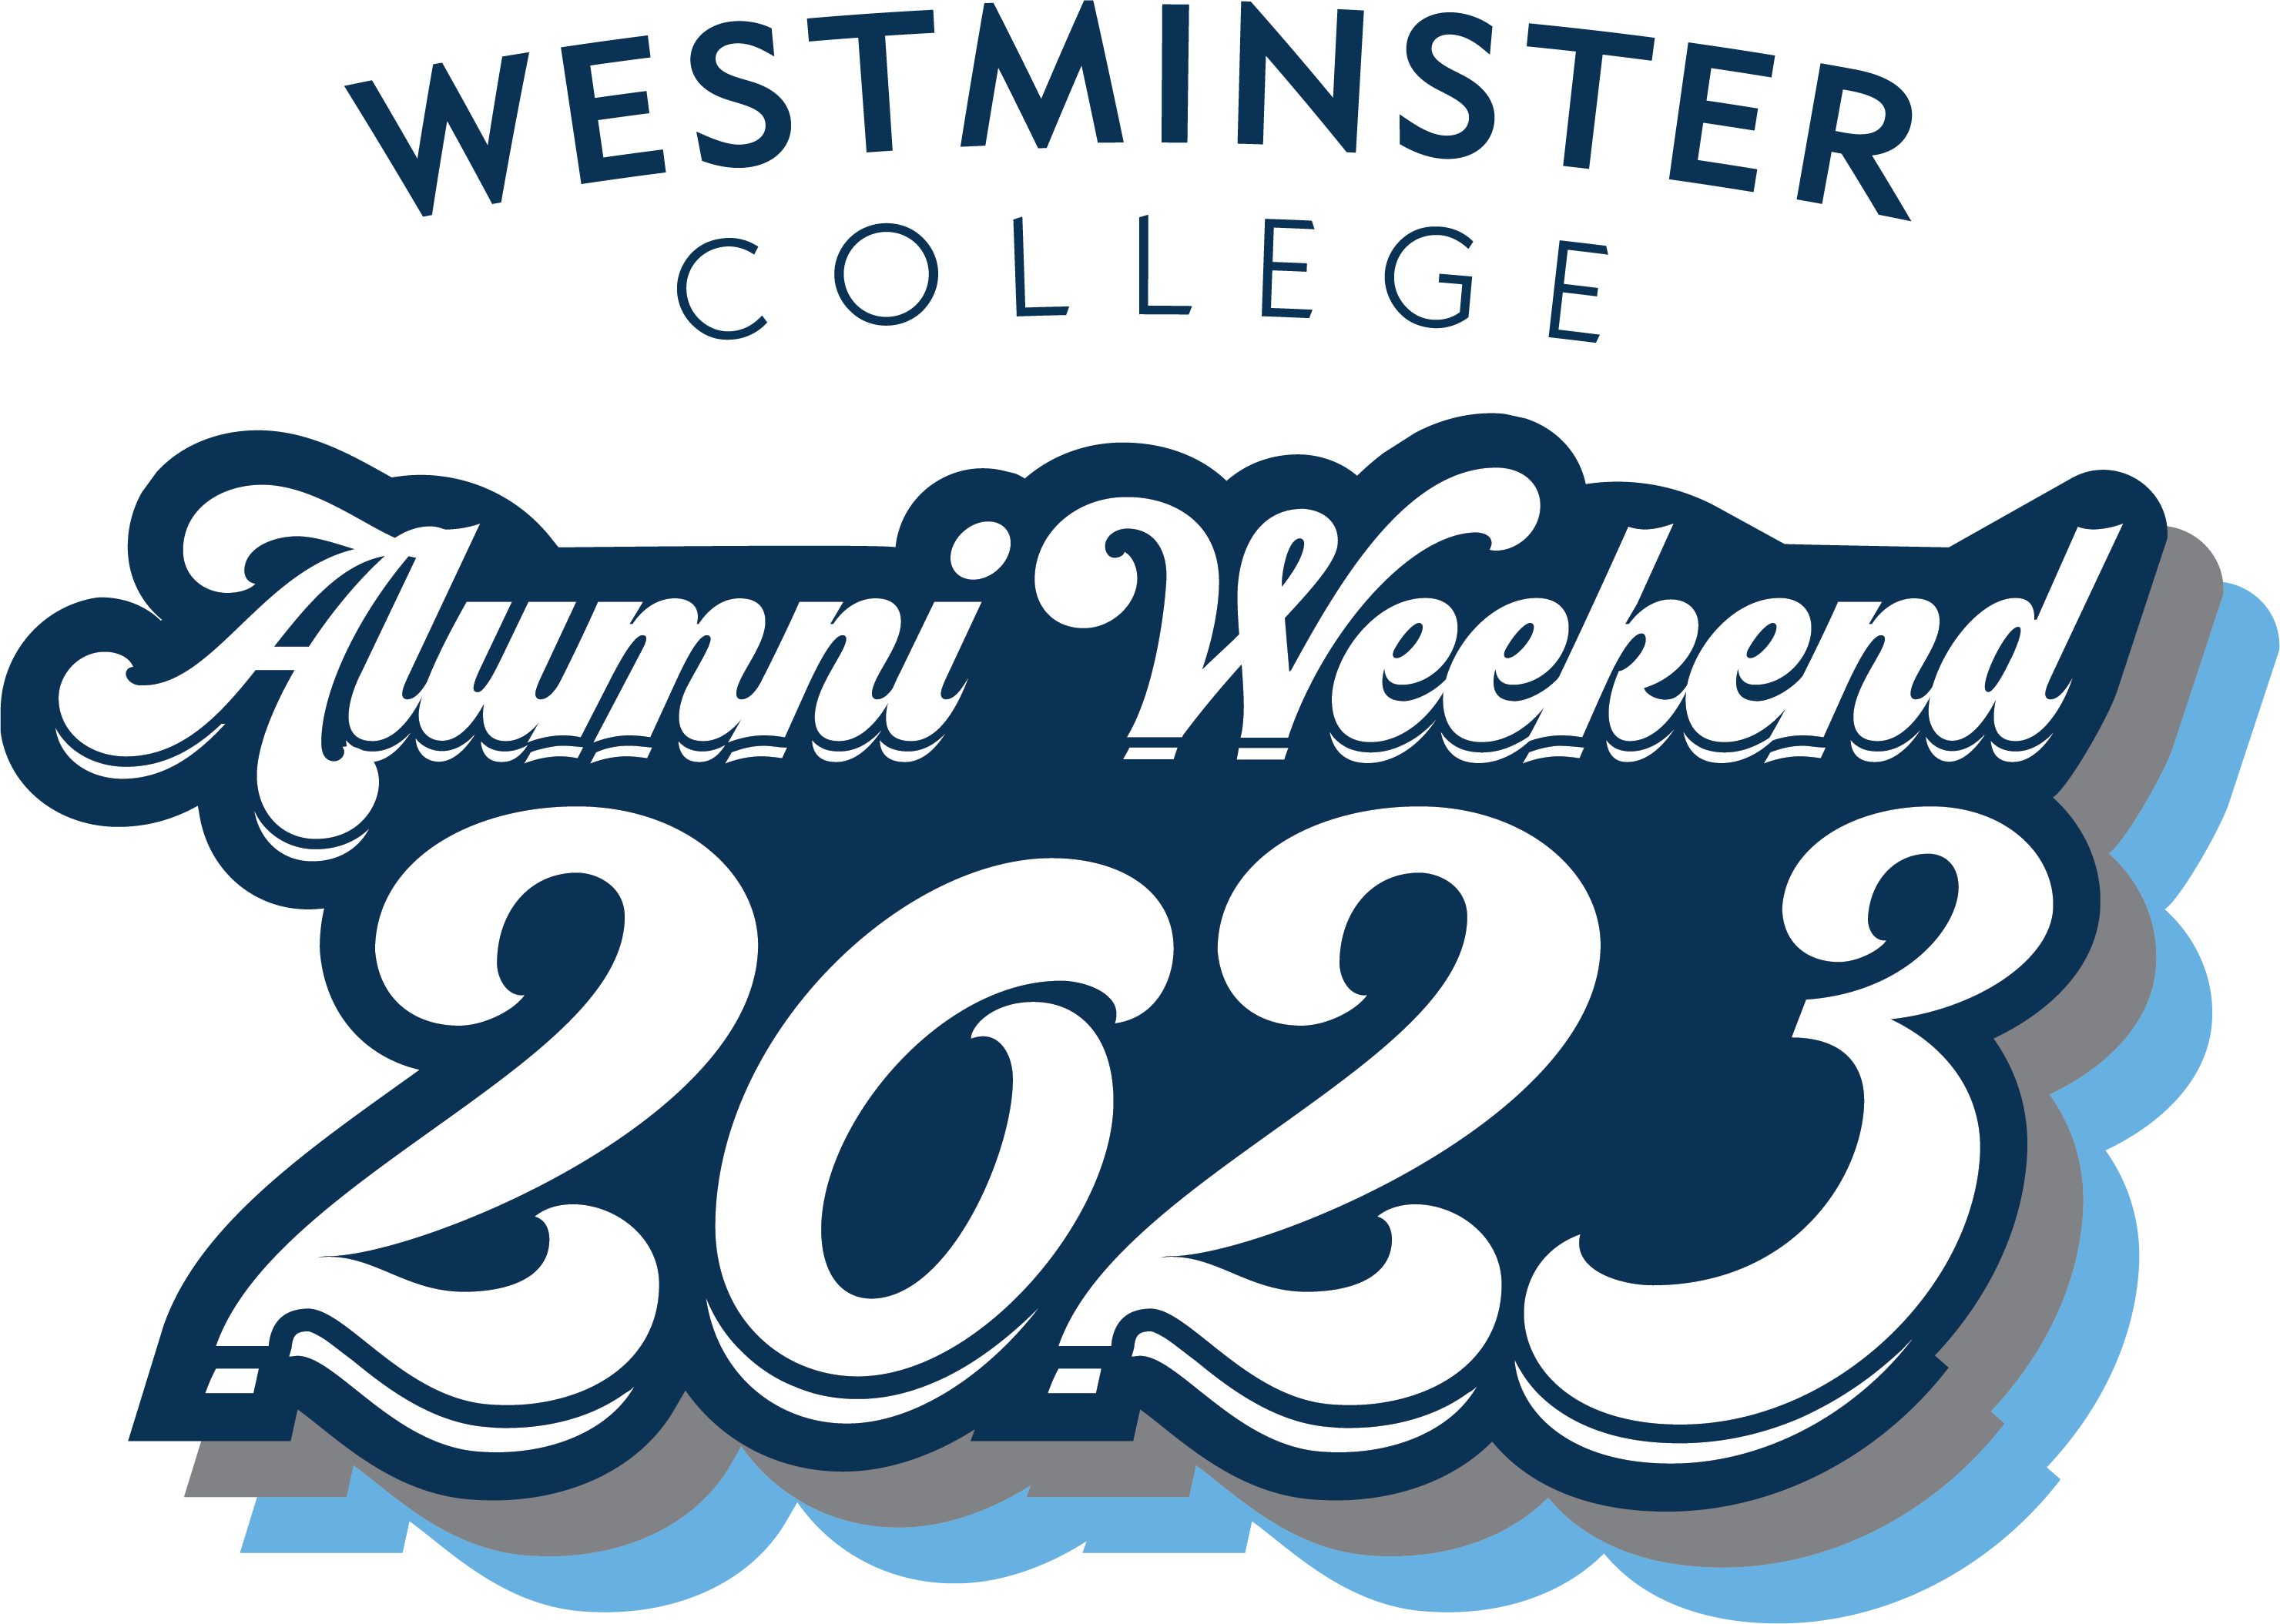 Alumni Weekend 2023